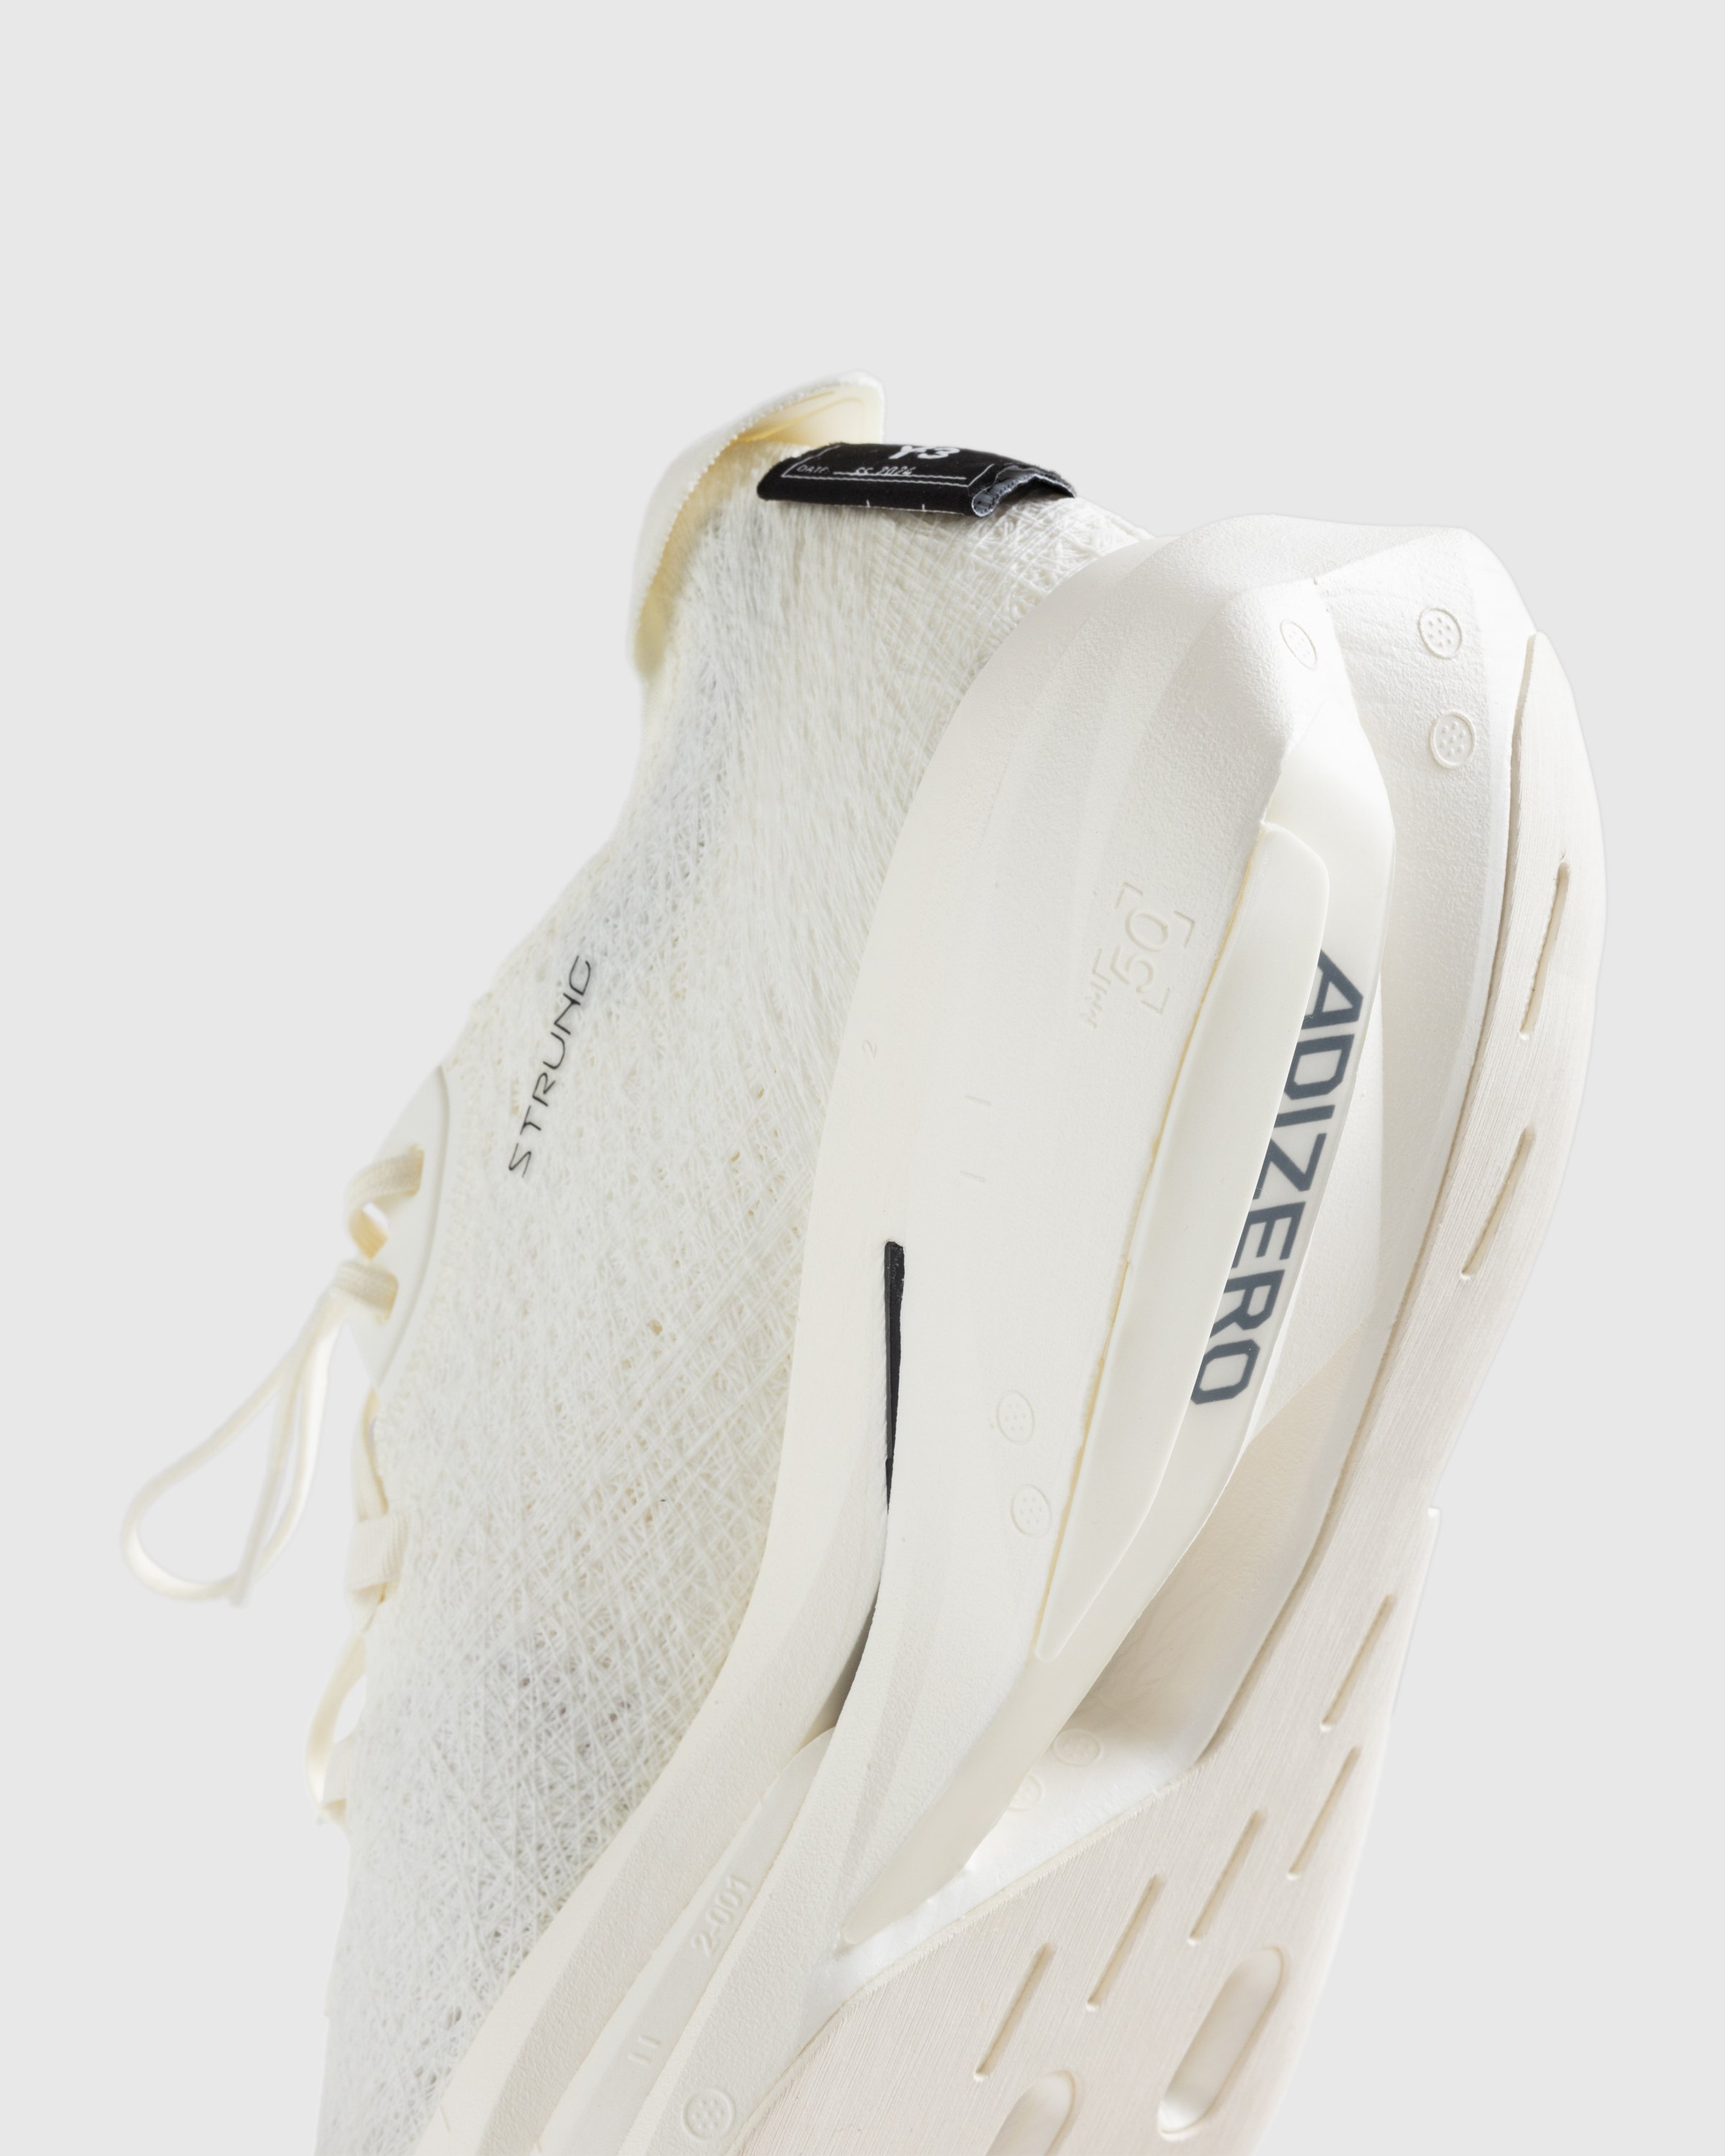 Y-3 - Prime X 2 Strun Owhite/Cblack/O - Footwear - White - Image 6